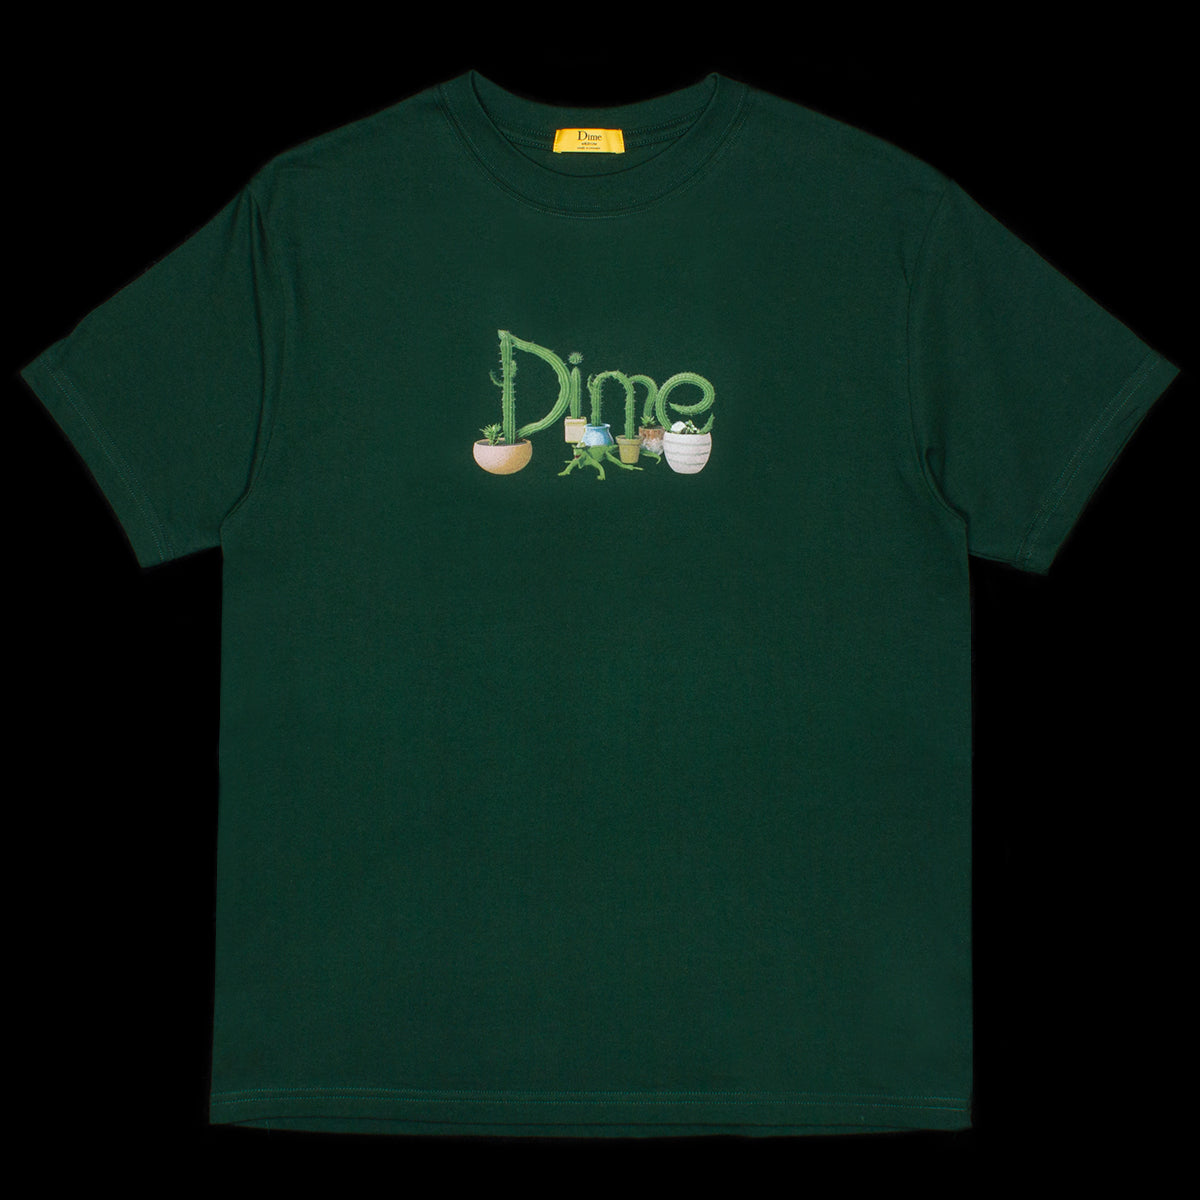 Black Cactus T-Shirt by Dime on Sale